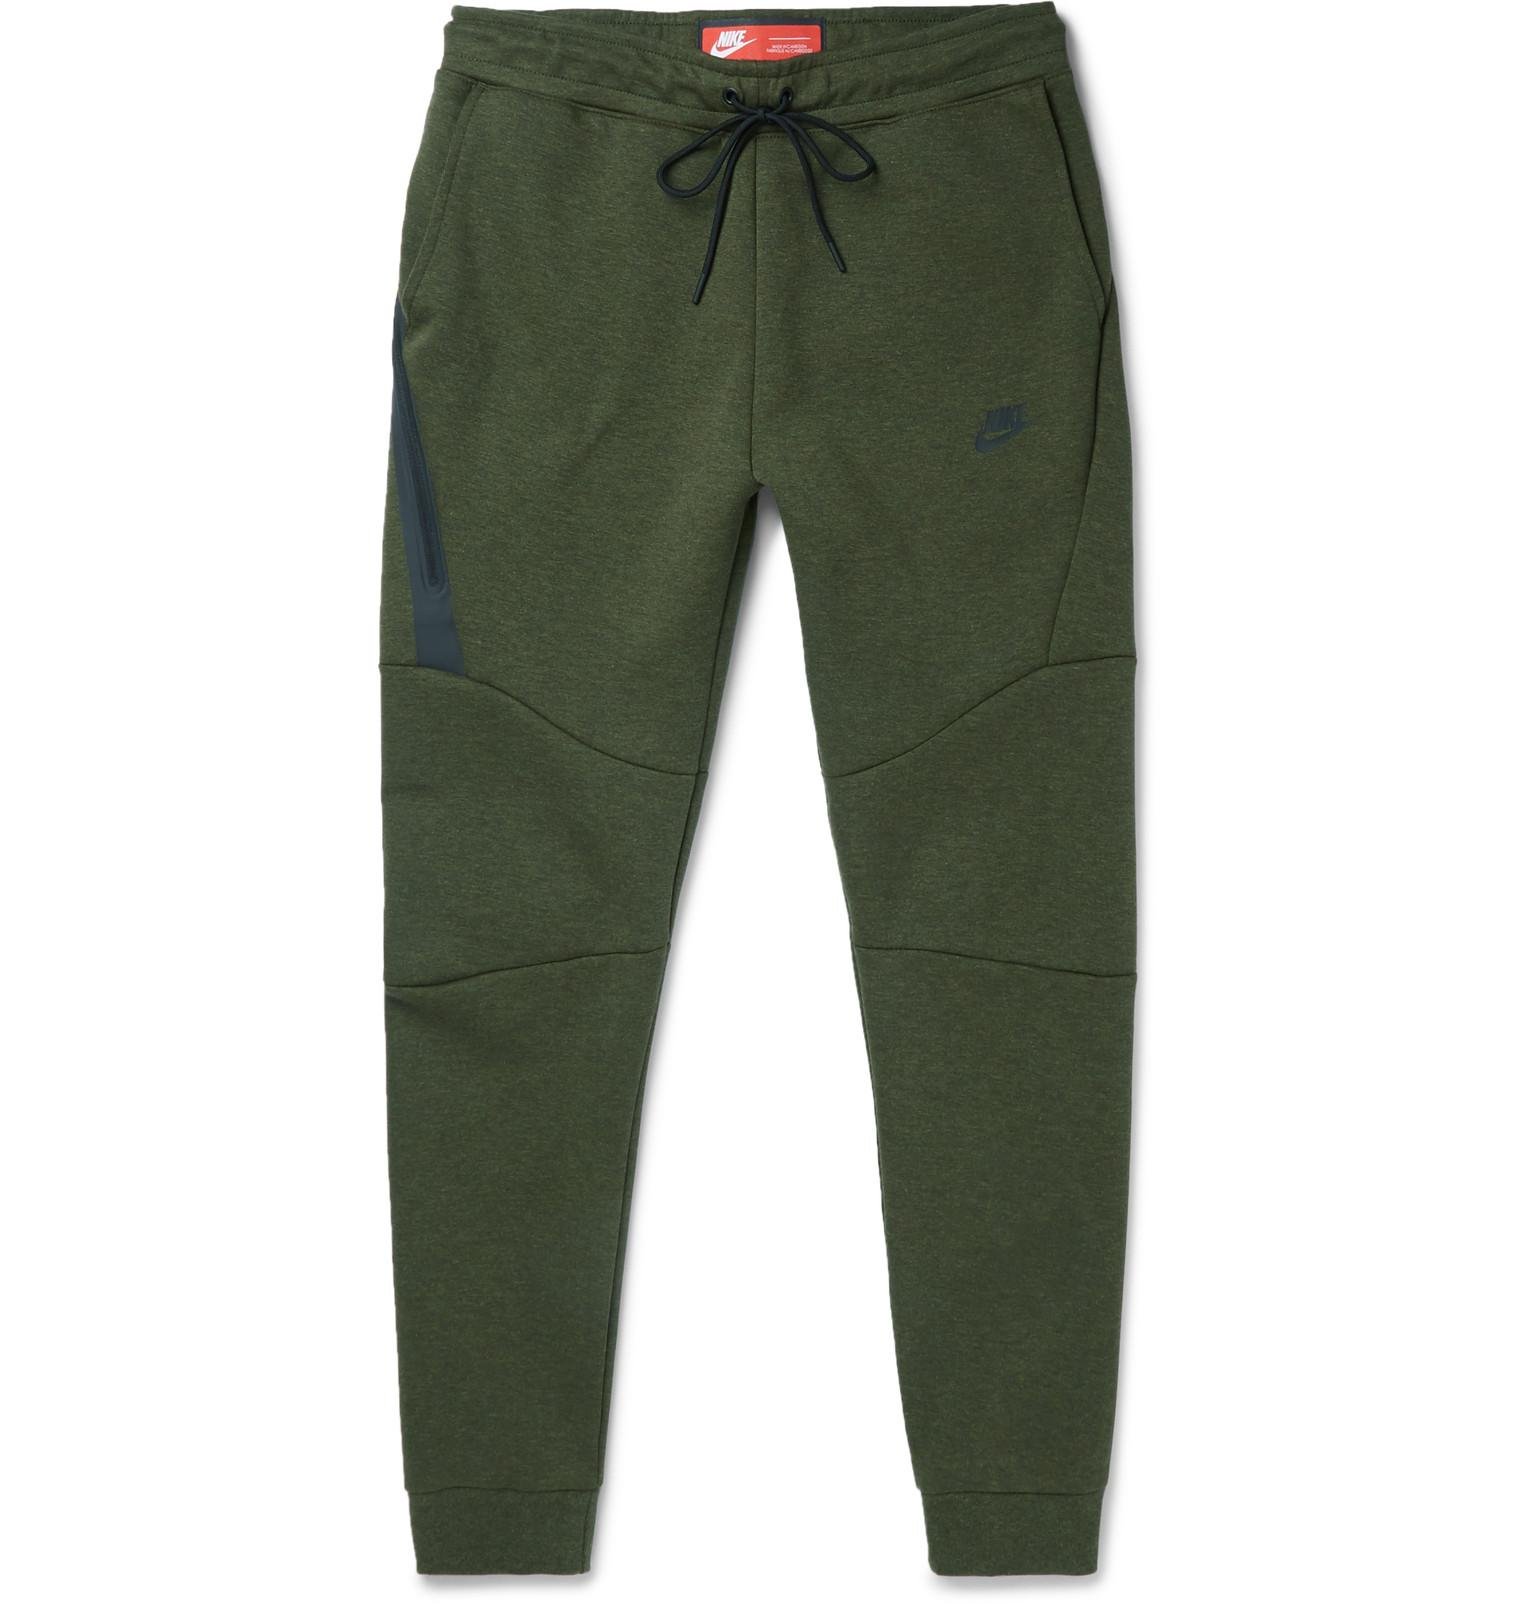 Nike Tapered Cotton-blend Tech Fleece Sweatpants in Green for Men - Lyst